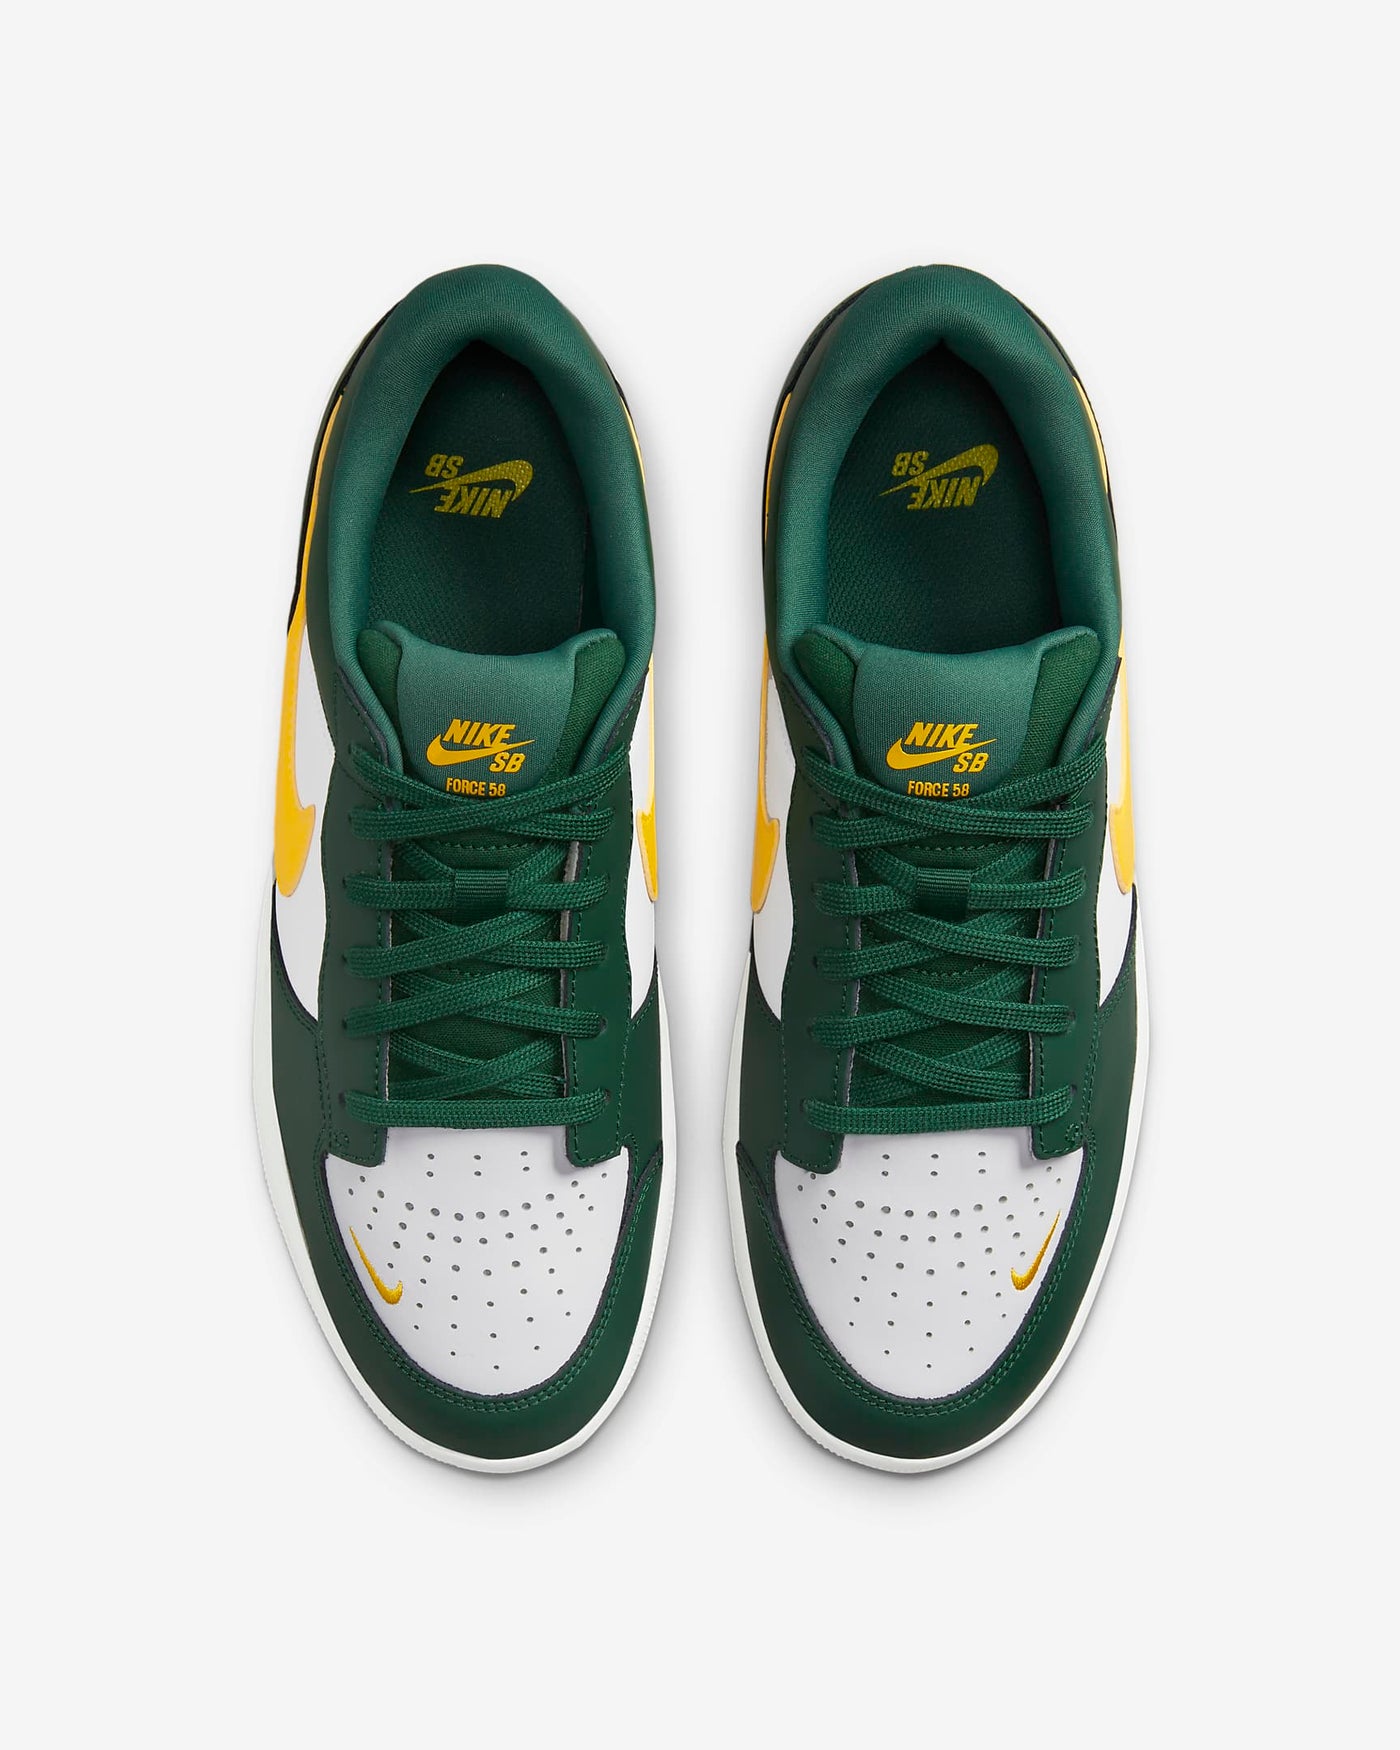 Nike SB 7505 Force 58 Premium - Gorge Green / Weiß / Gorge Green / Tour Yellow